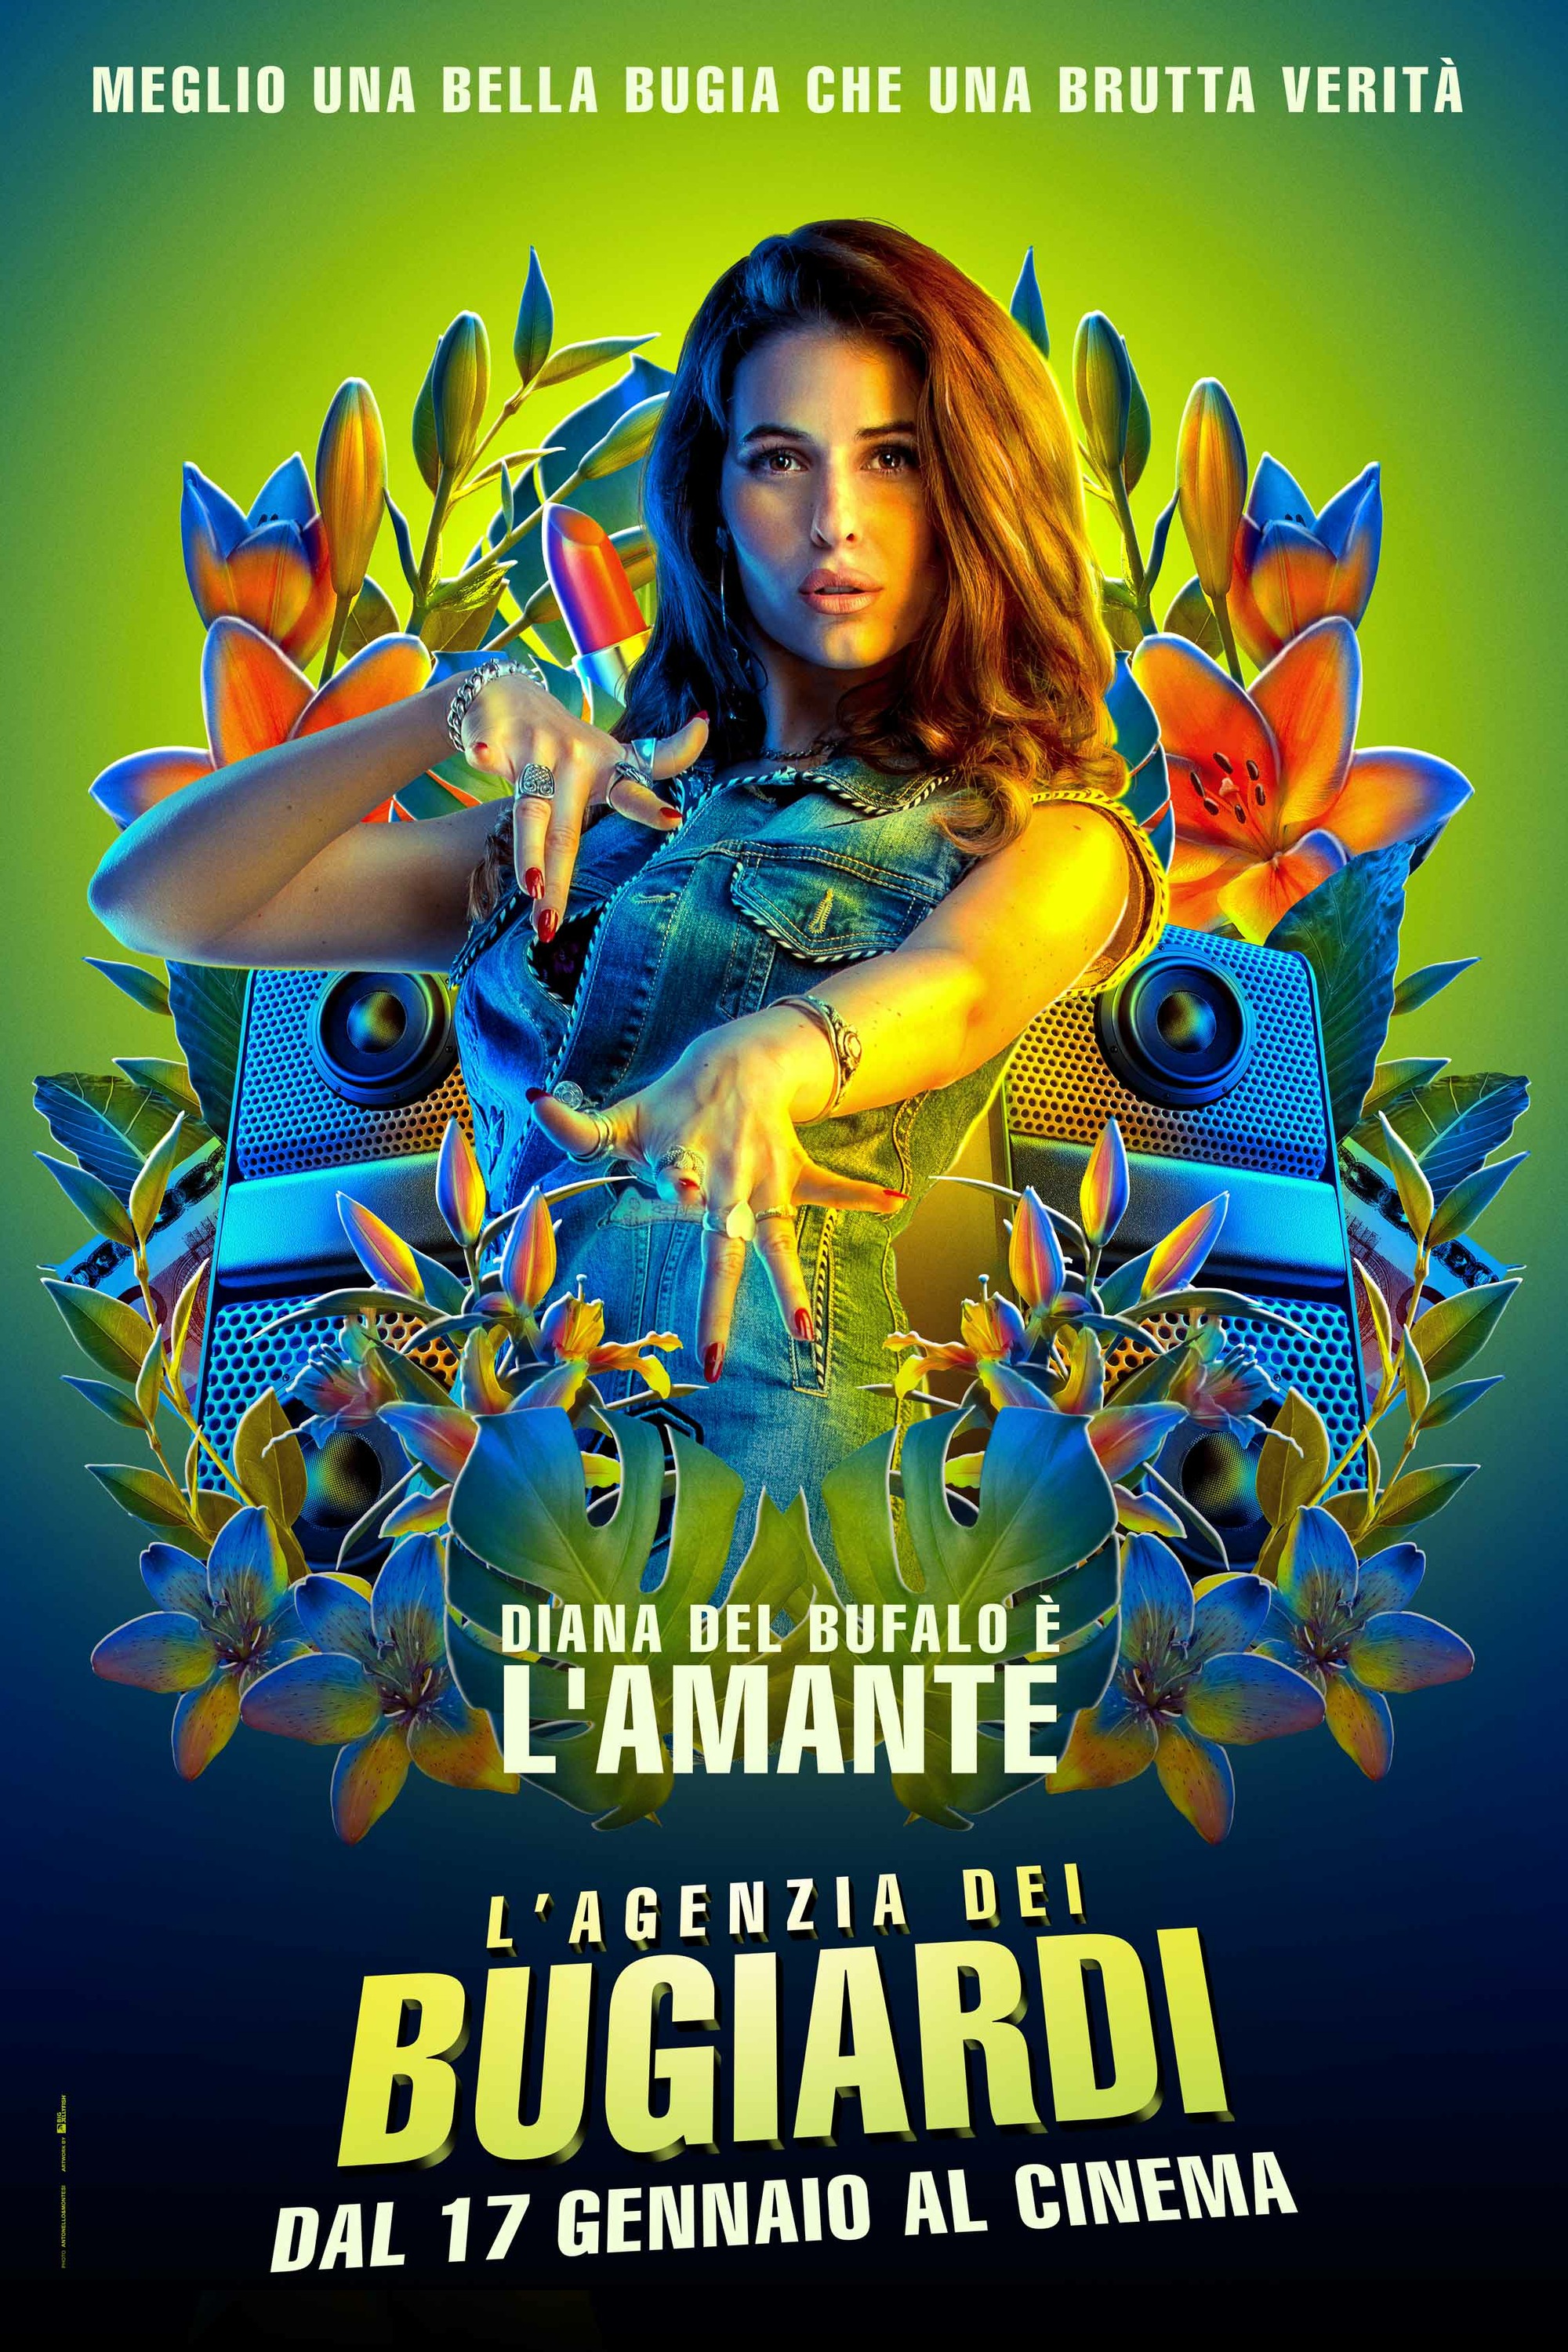 Mega Sized Movie Poster Image for L'agenzia dei bugiardi (#2 of 7)